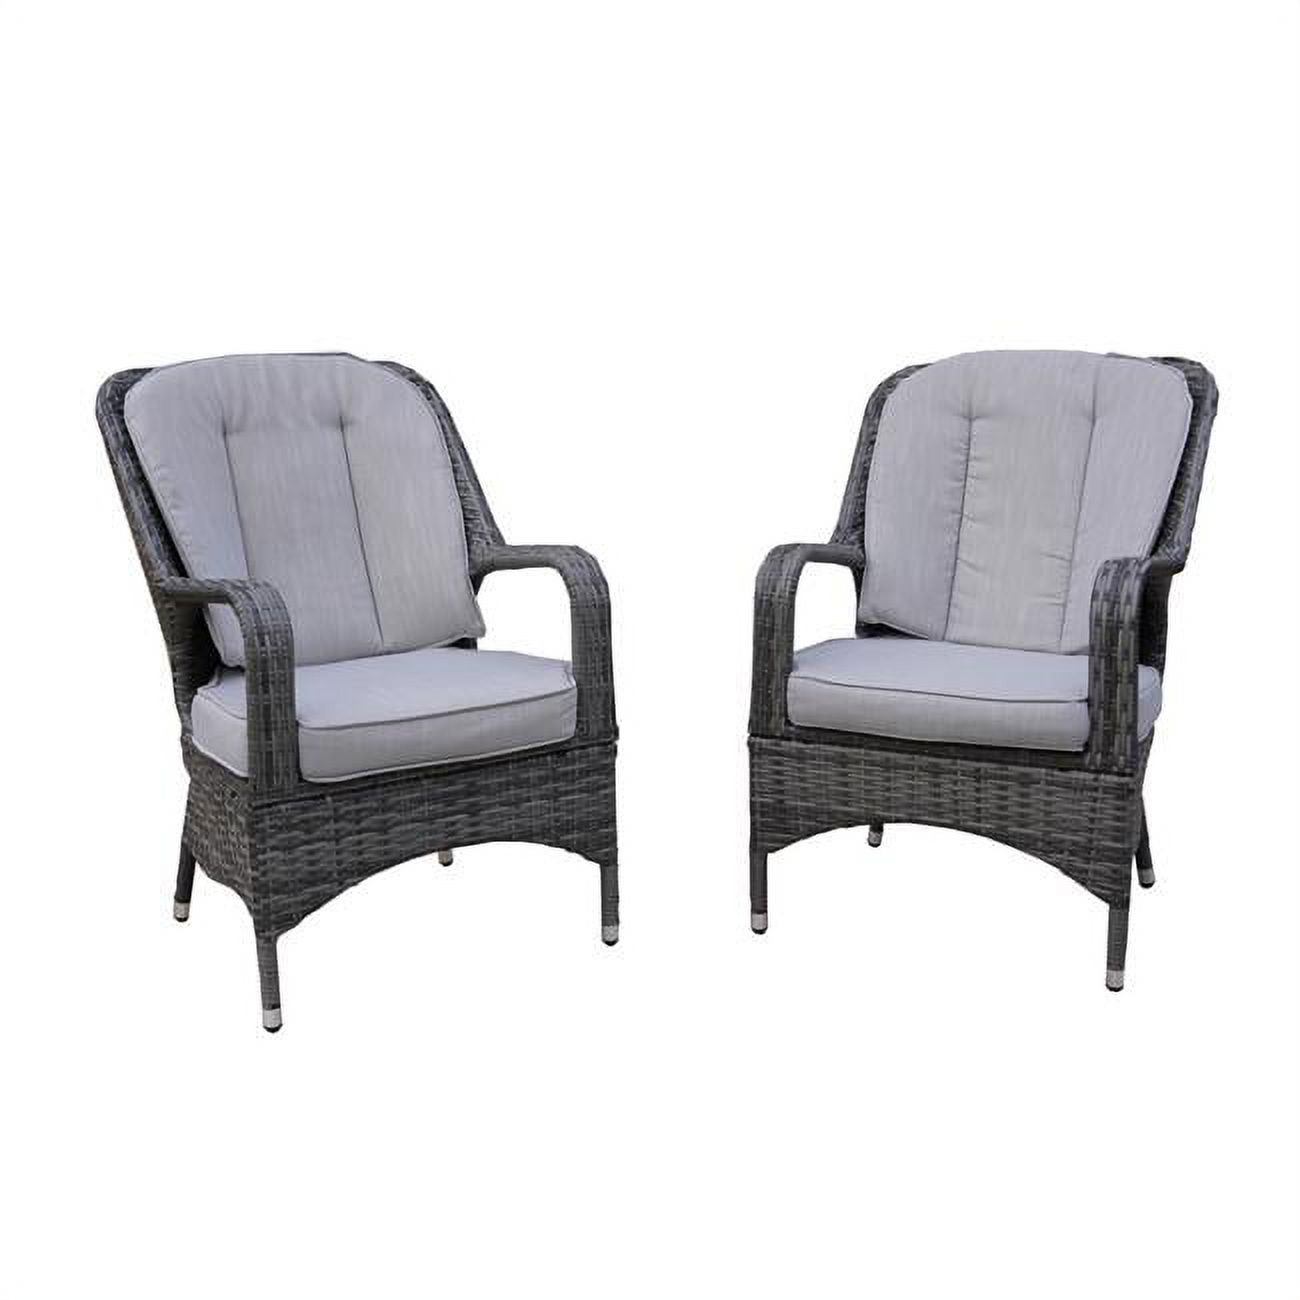 Direct Wicker  Set of 2 Grey Outdoor Garden Lamao Rattan Aluminum Frame Dining Chairs - image 1 of 1